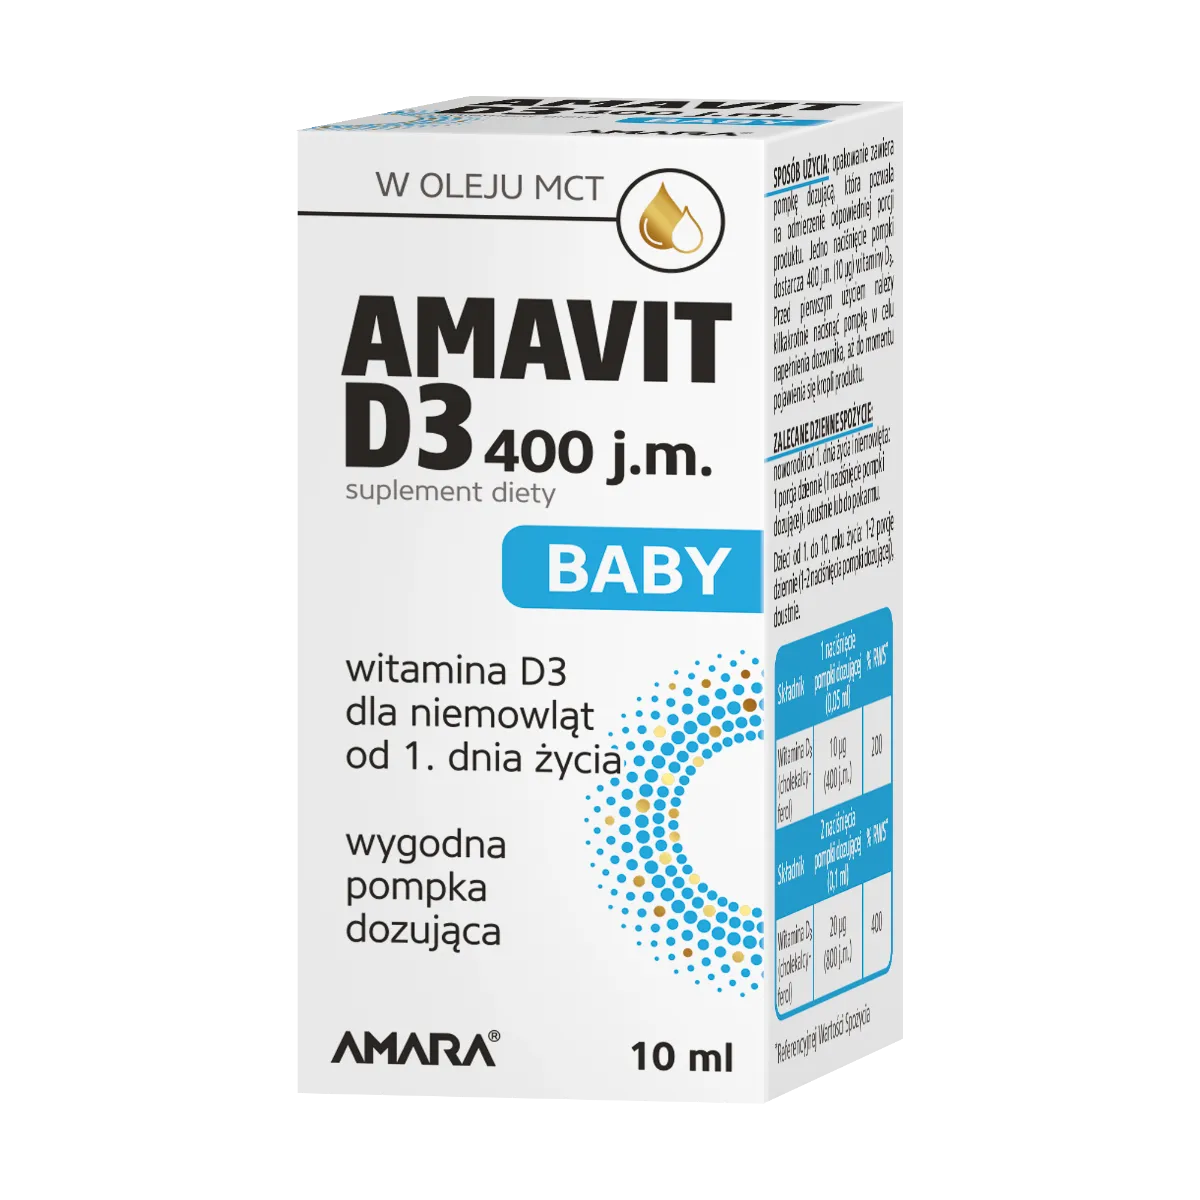 Amavit D3 Baby, 400 j.m., aerozol 10 ml